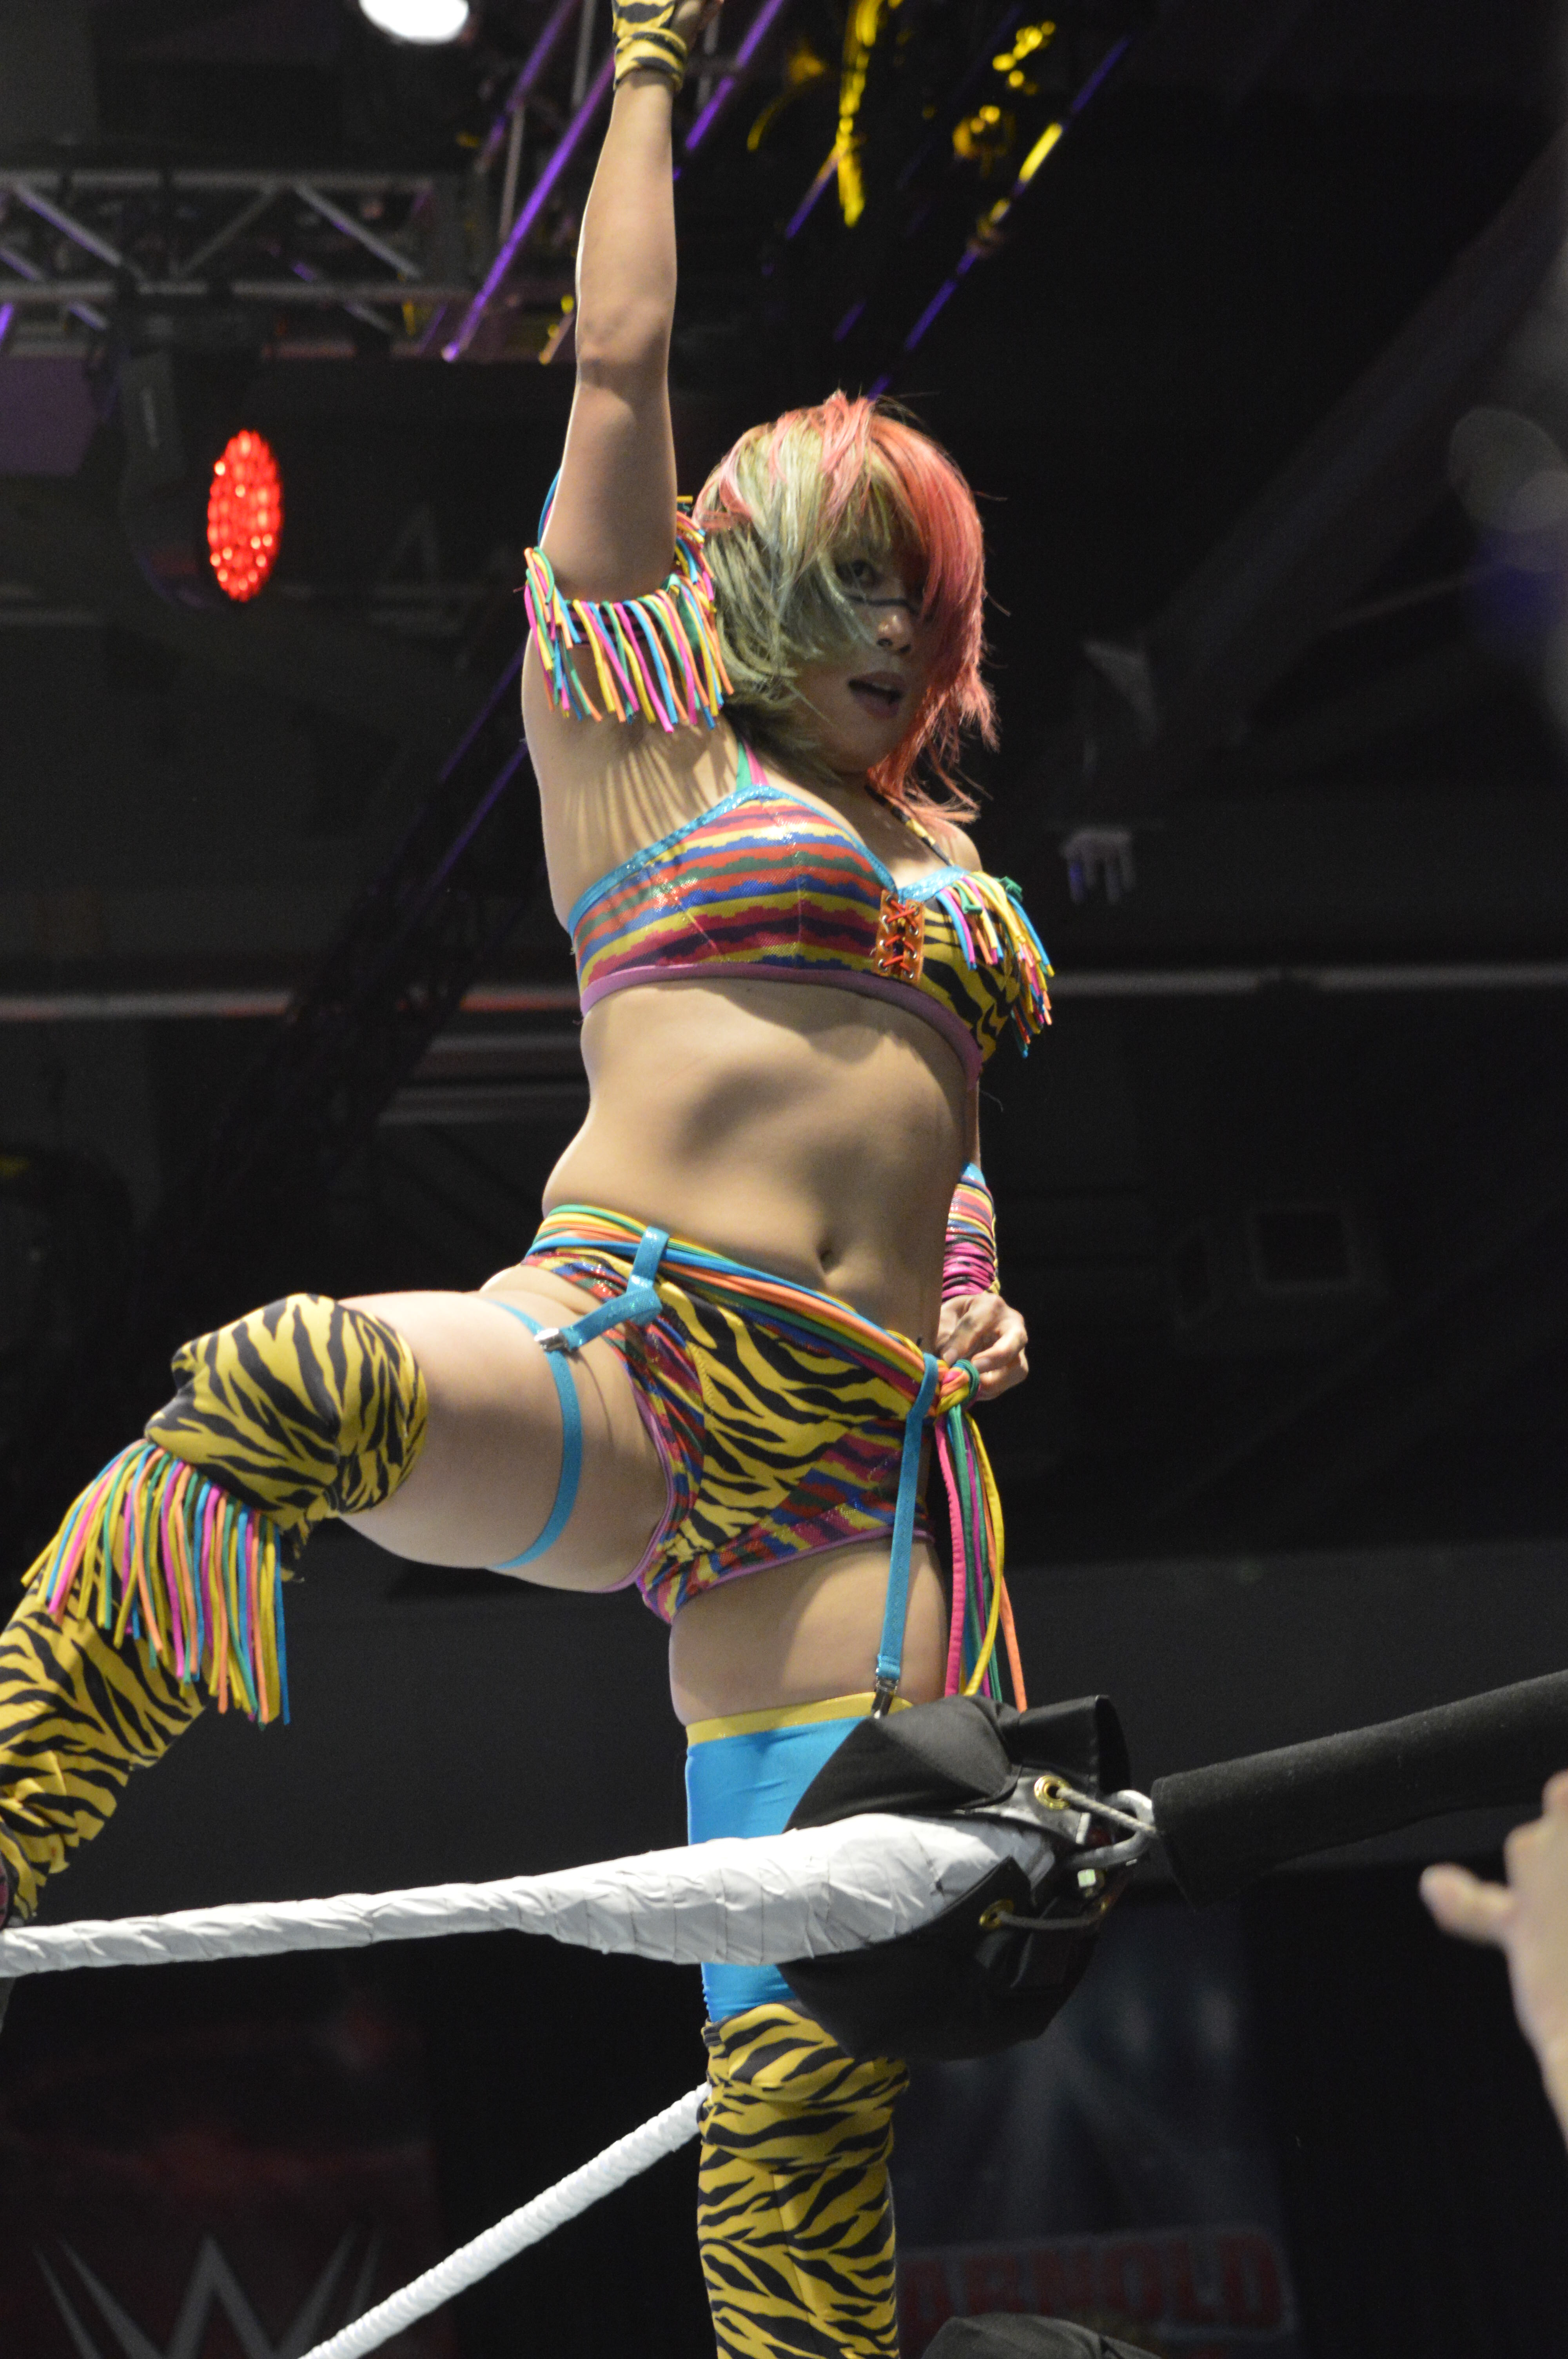 File:Asuka WWE.jpg - Wikipedia